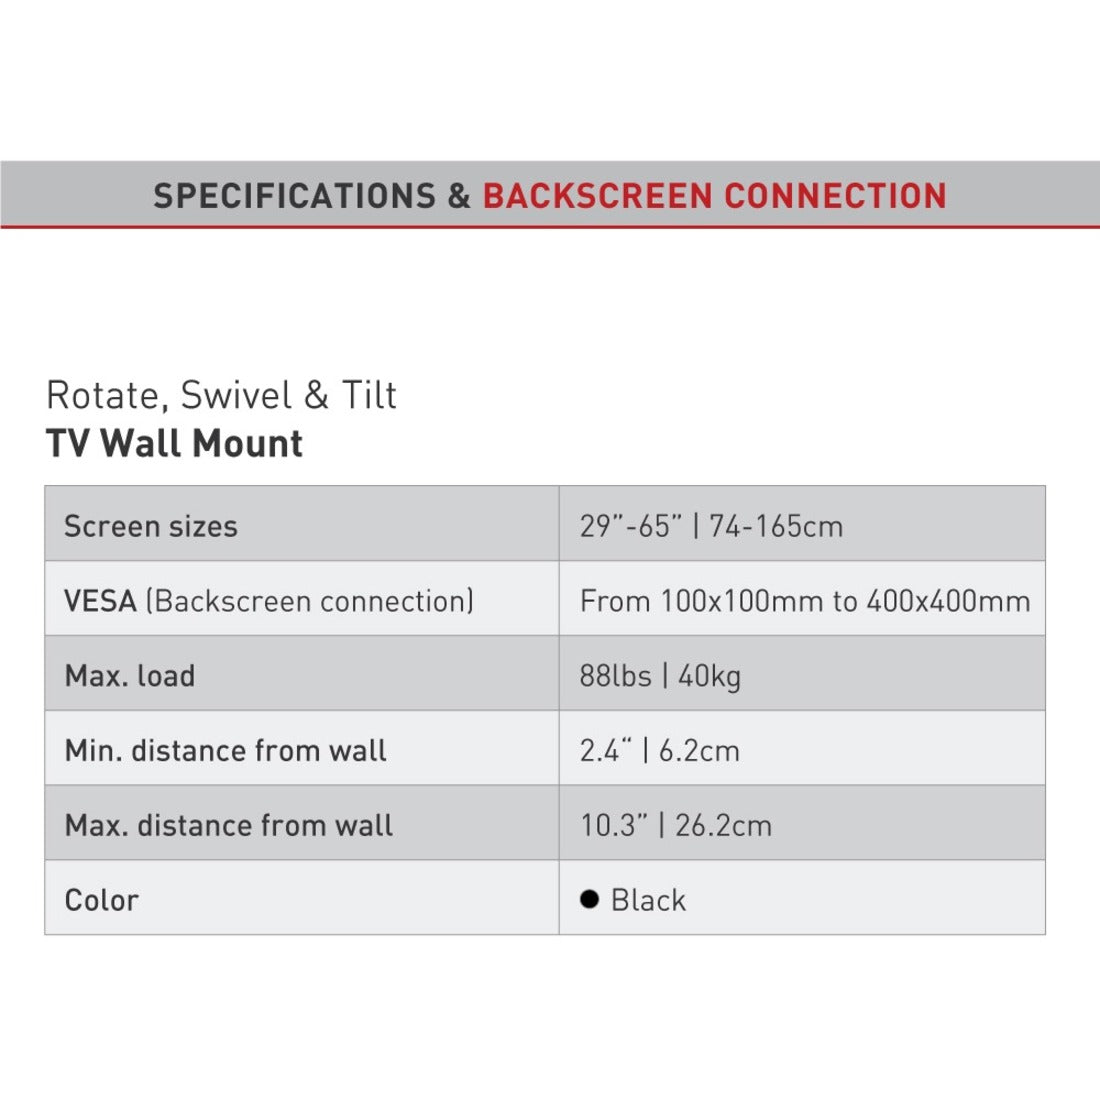 Barkan 3300.B Full-Motion Wall Mount for TV - Black, 29-65" screens, 88lbs weight capacity